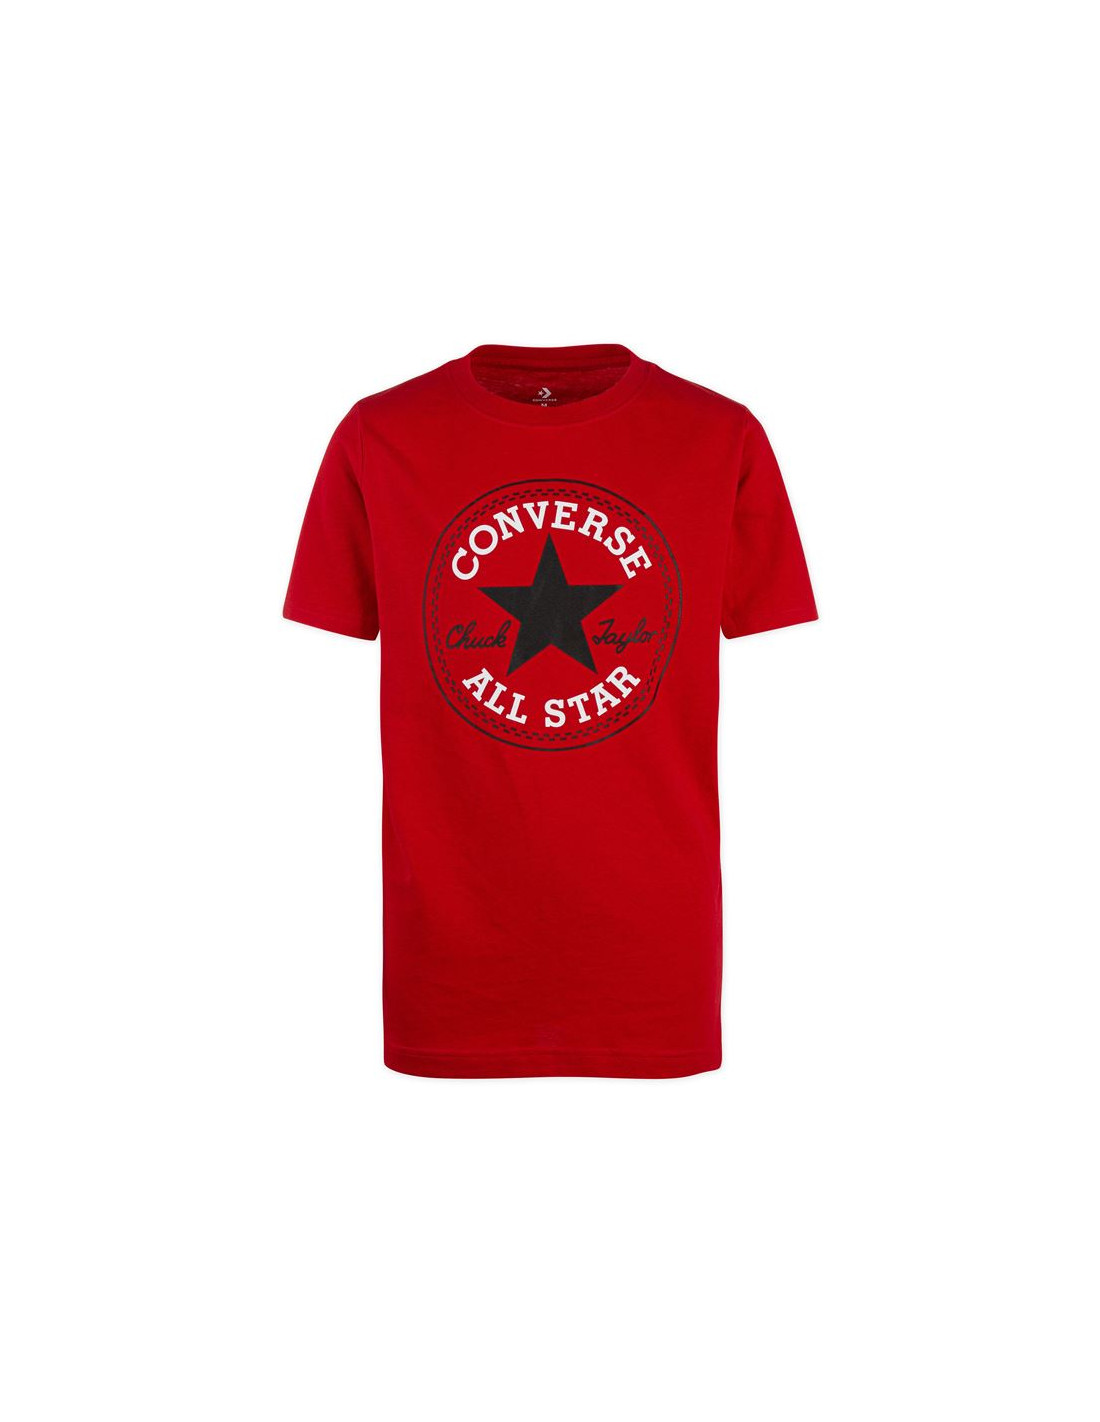 Camiseta converse chuck patch b red